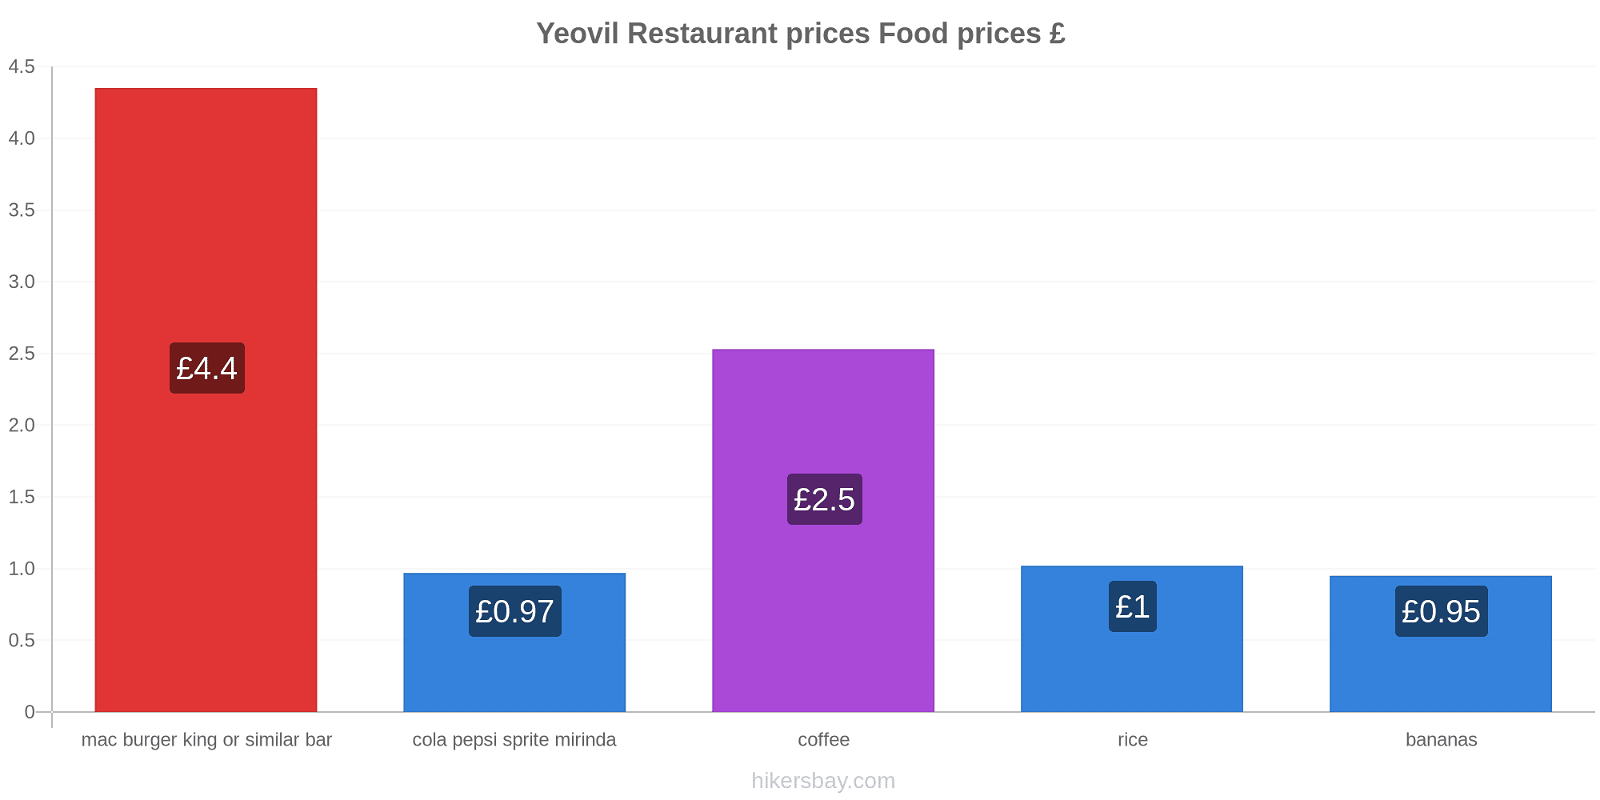 Yeovil price changes hikersbay.com